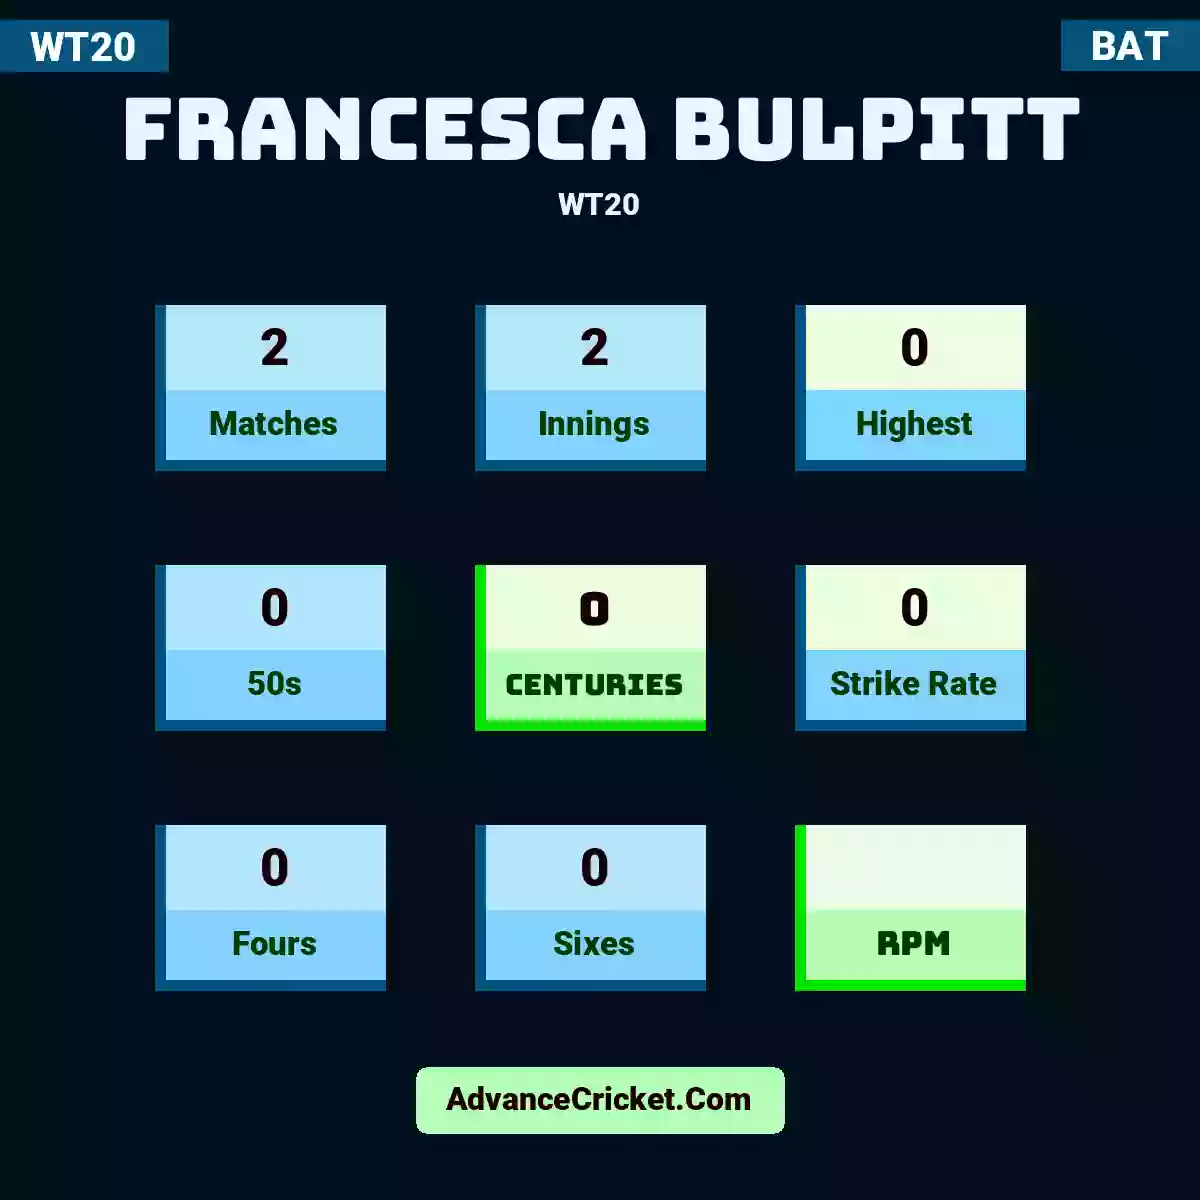 Francesca Bulpitt WT20 , Francesca Bulpitt played 2 matches, scored 0 runs as highest, 0 half-centuries, and 0 centuries, with a strike rate of 0. F.Bulpitt hit 0 fours and 0 sixes.